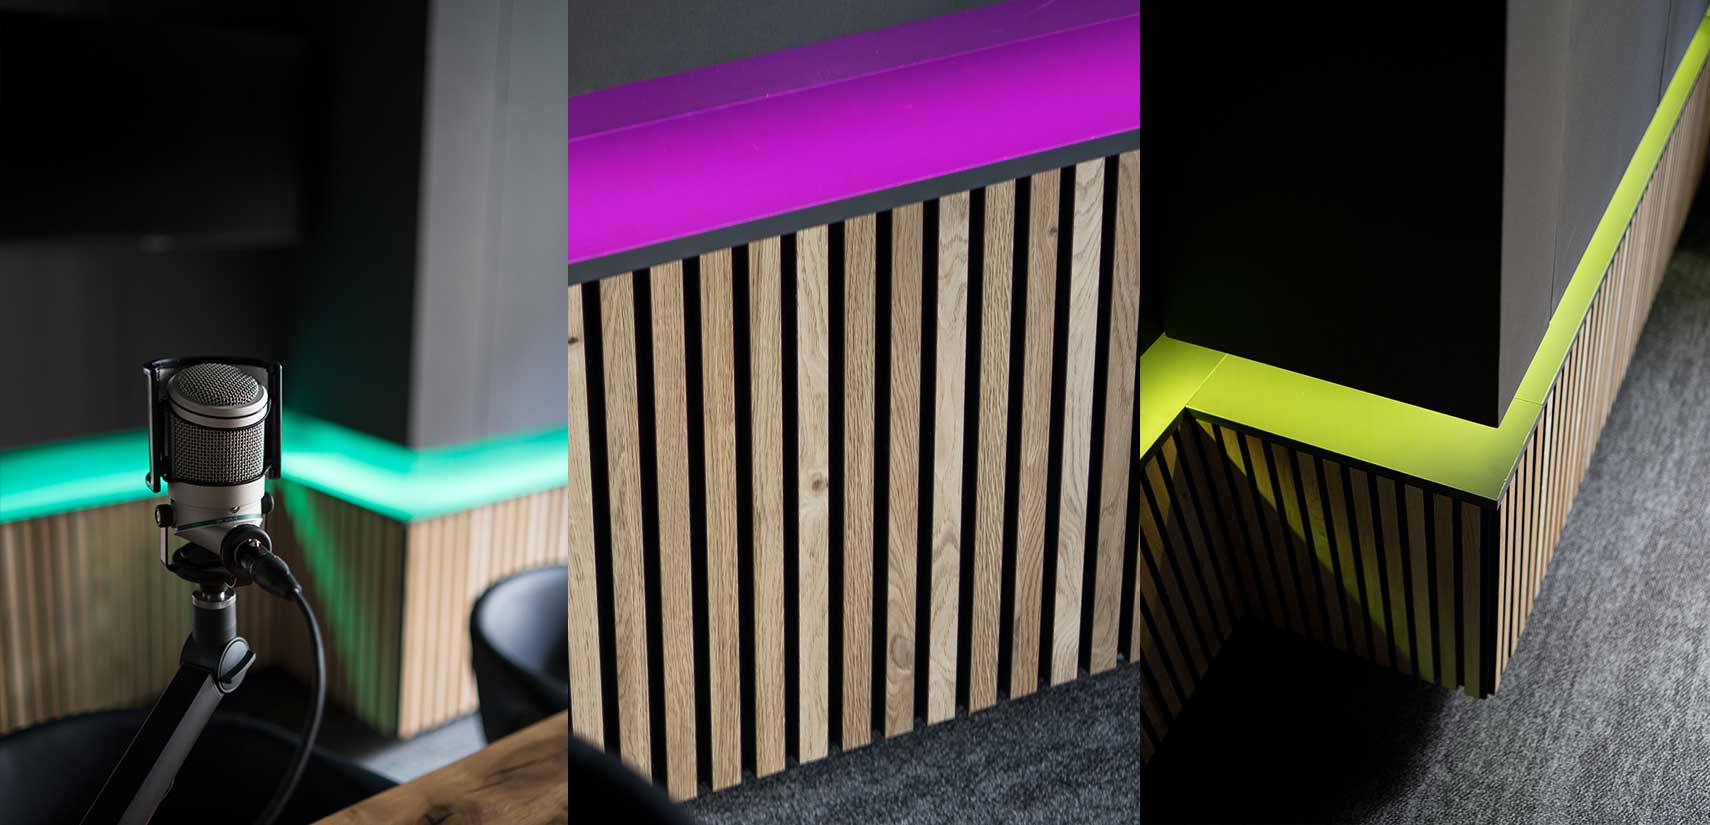 omr podstars greenroom interior and studio ambiente lights